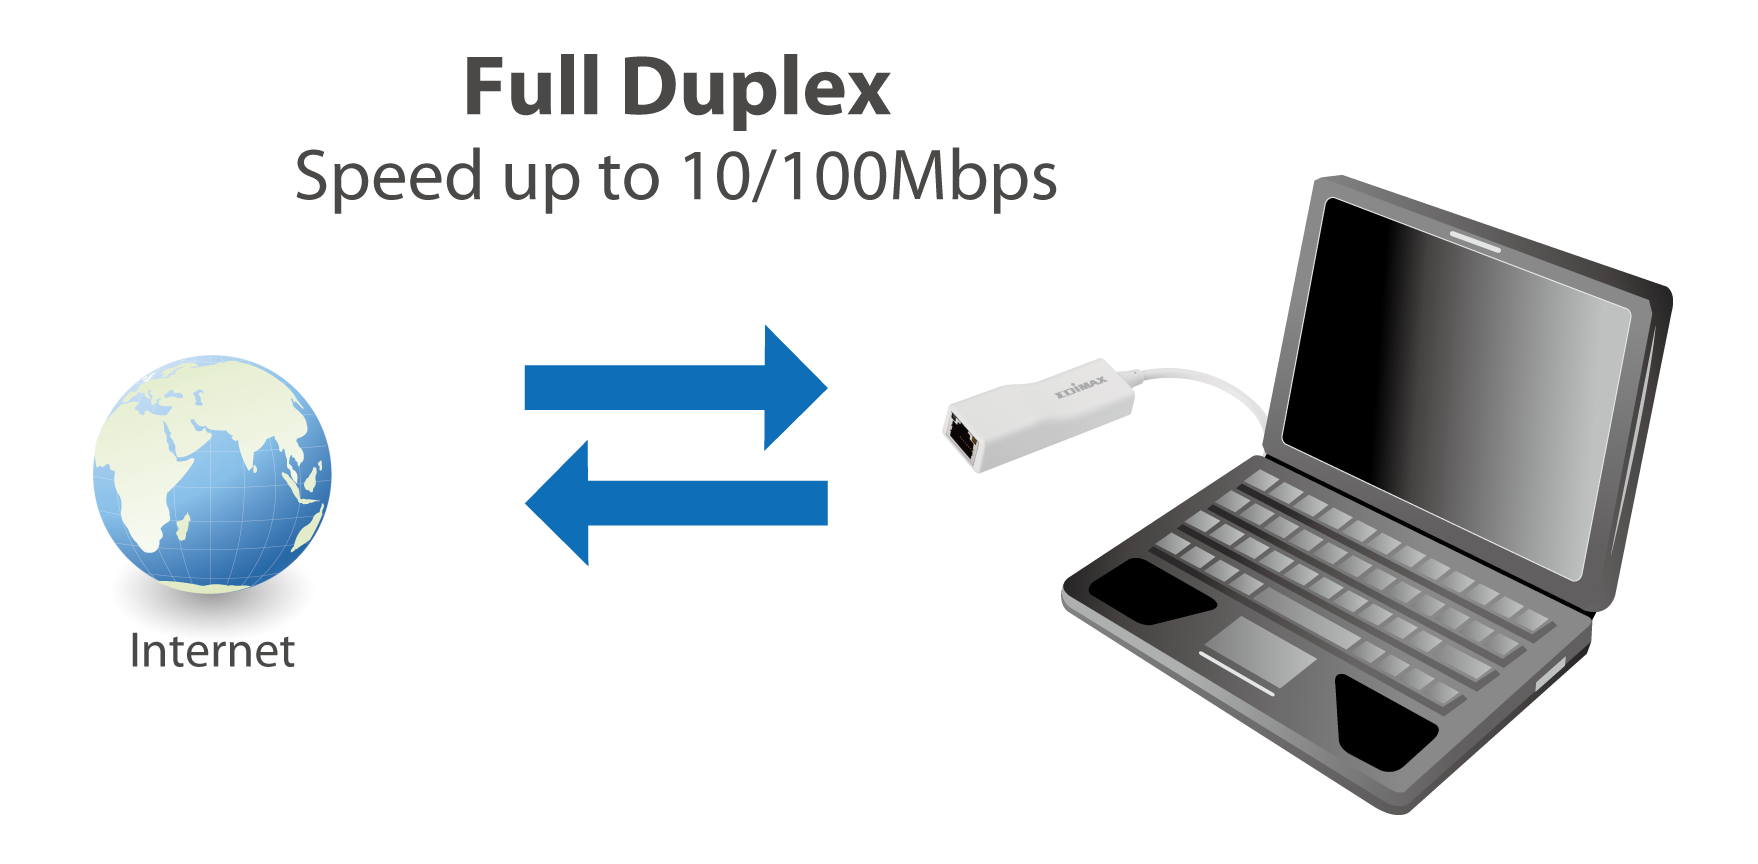 Edimax USB 2.0 Fast Ethernet Adapter EU-4208_full_duplex.png